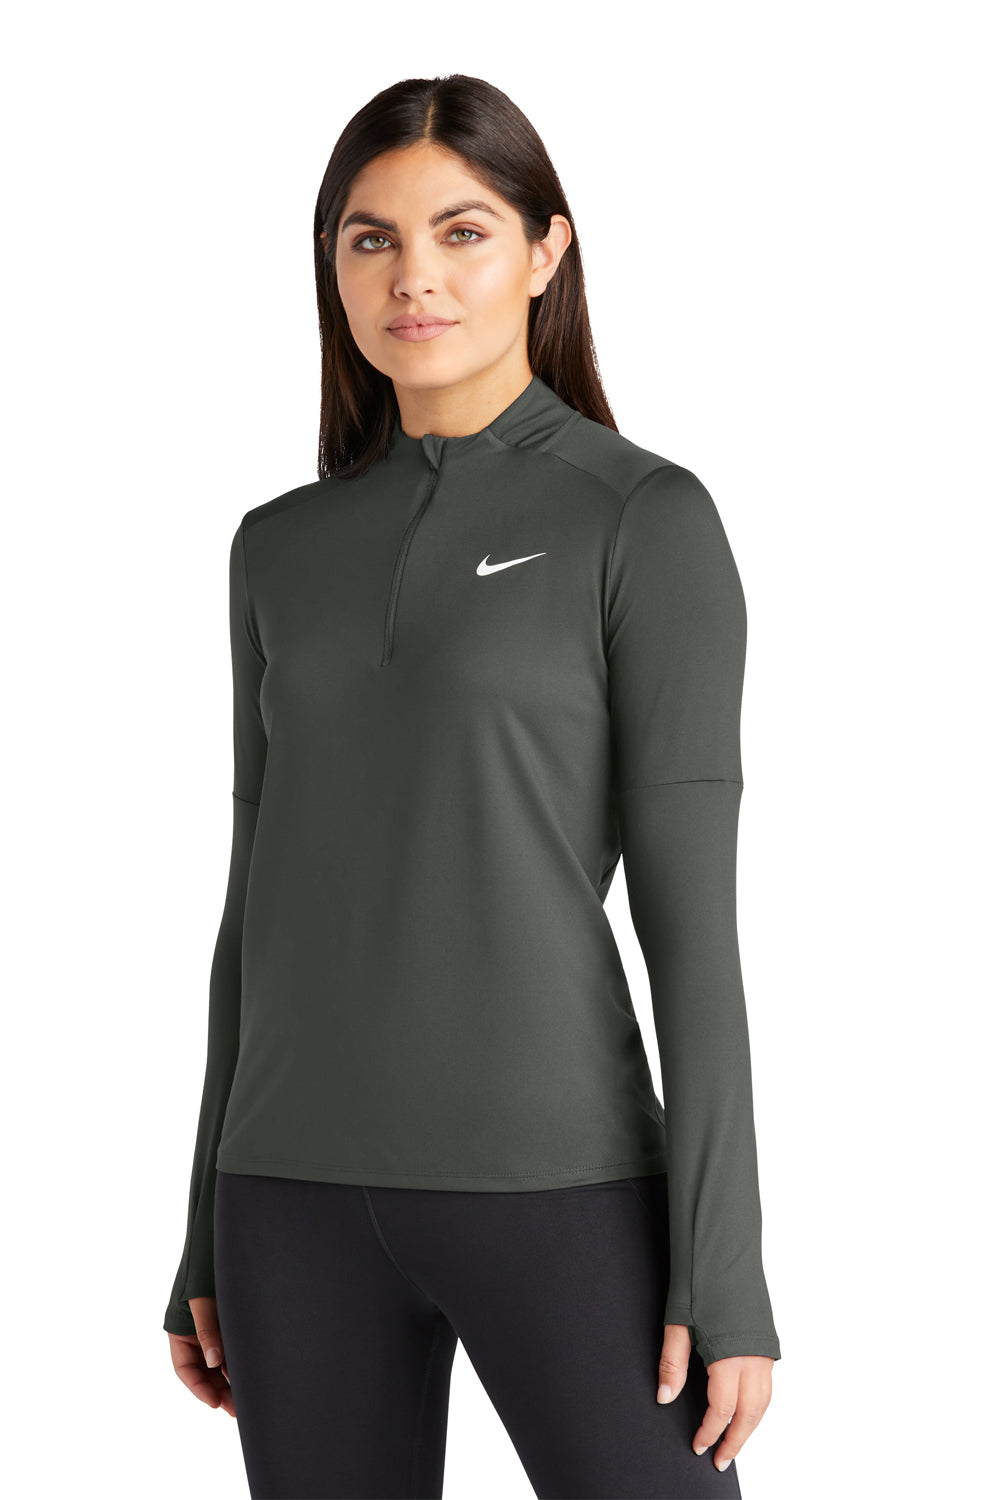 Nike NKDH4951 Womens Element Dri-Fit Moisture Wicking 1/4 Zip Sweatshirt Anthracite Grey Model 3Q